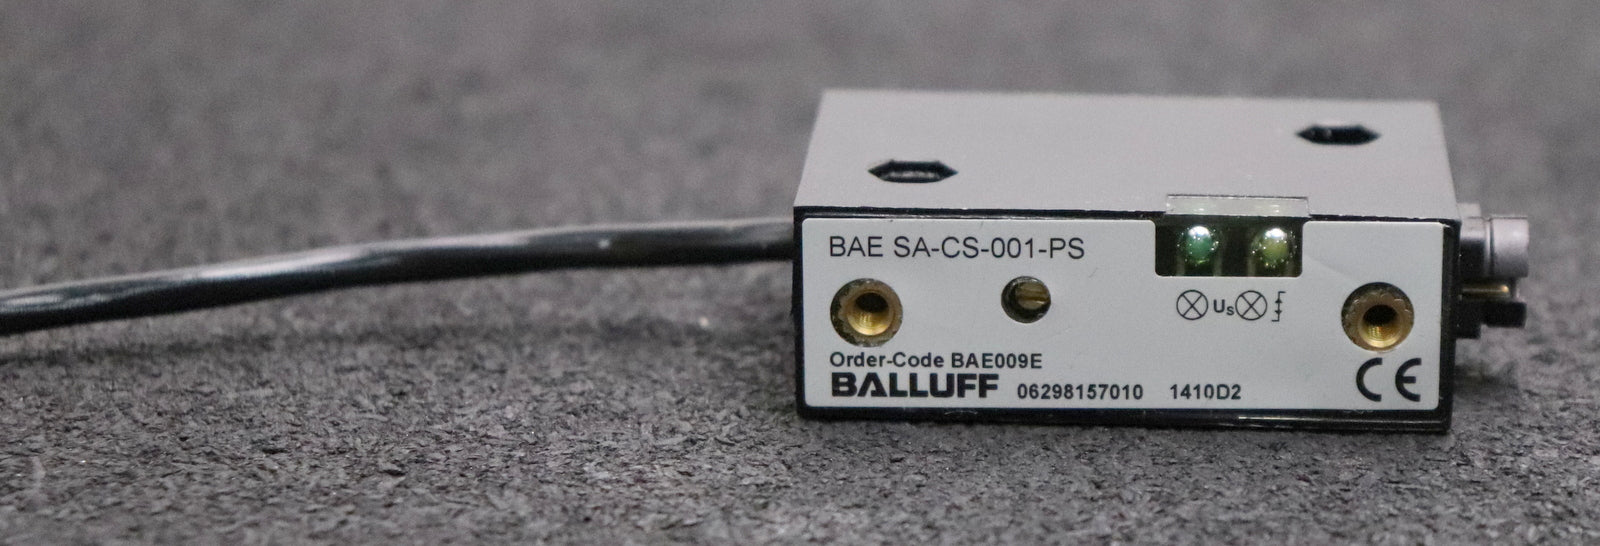 Bild des Artikels BALLUFF-Signalverstärker-BAE-SA-CS-001-PS-Order-Code-BAE009E-gebraucht